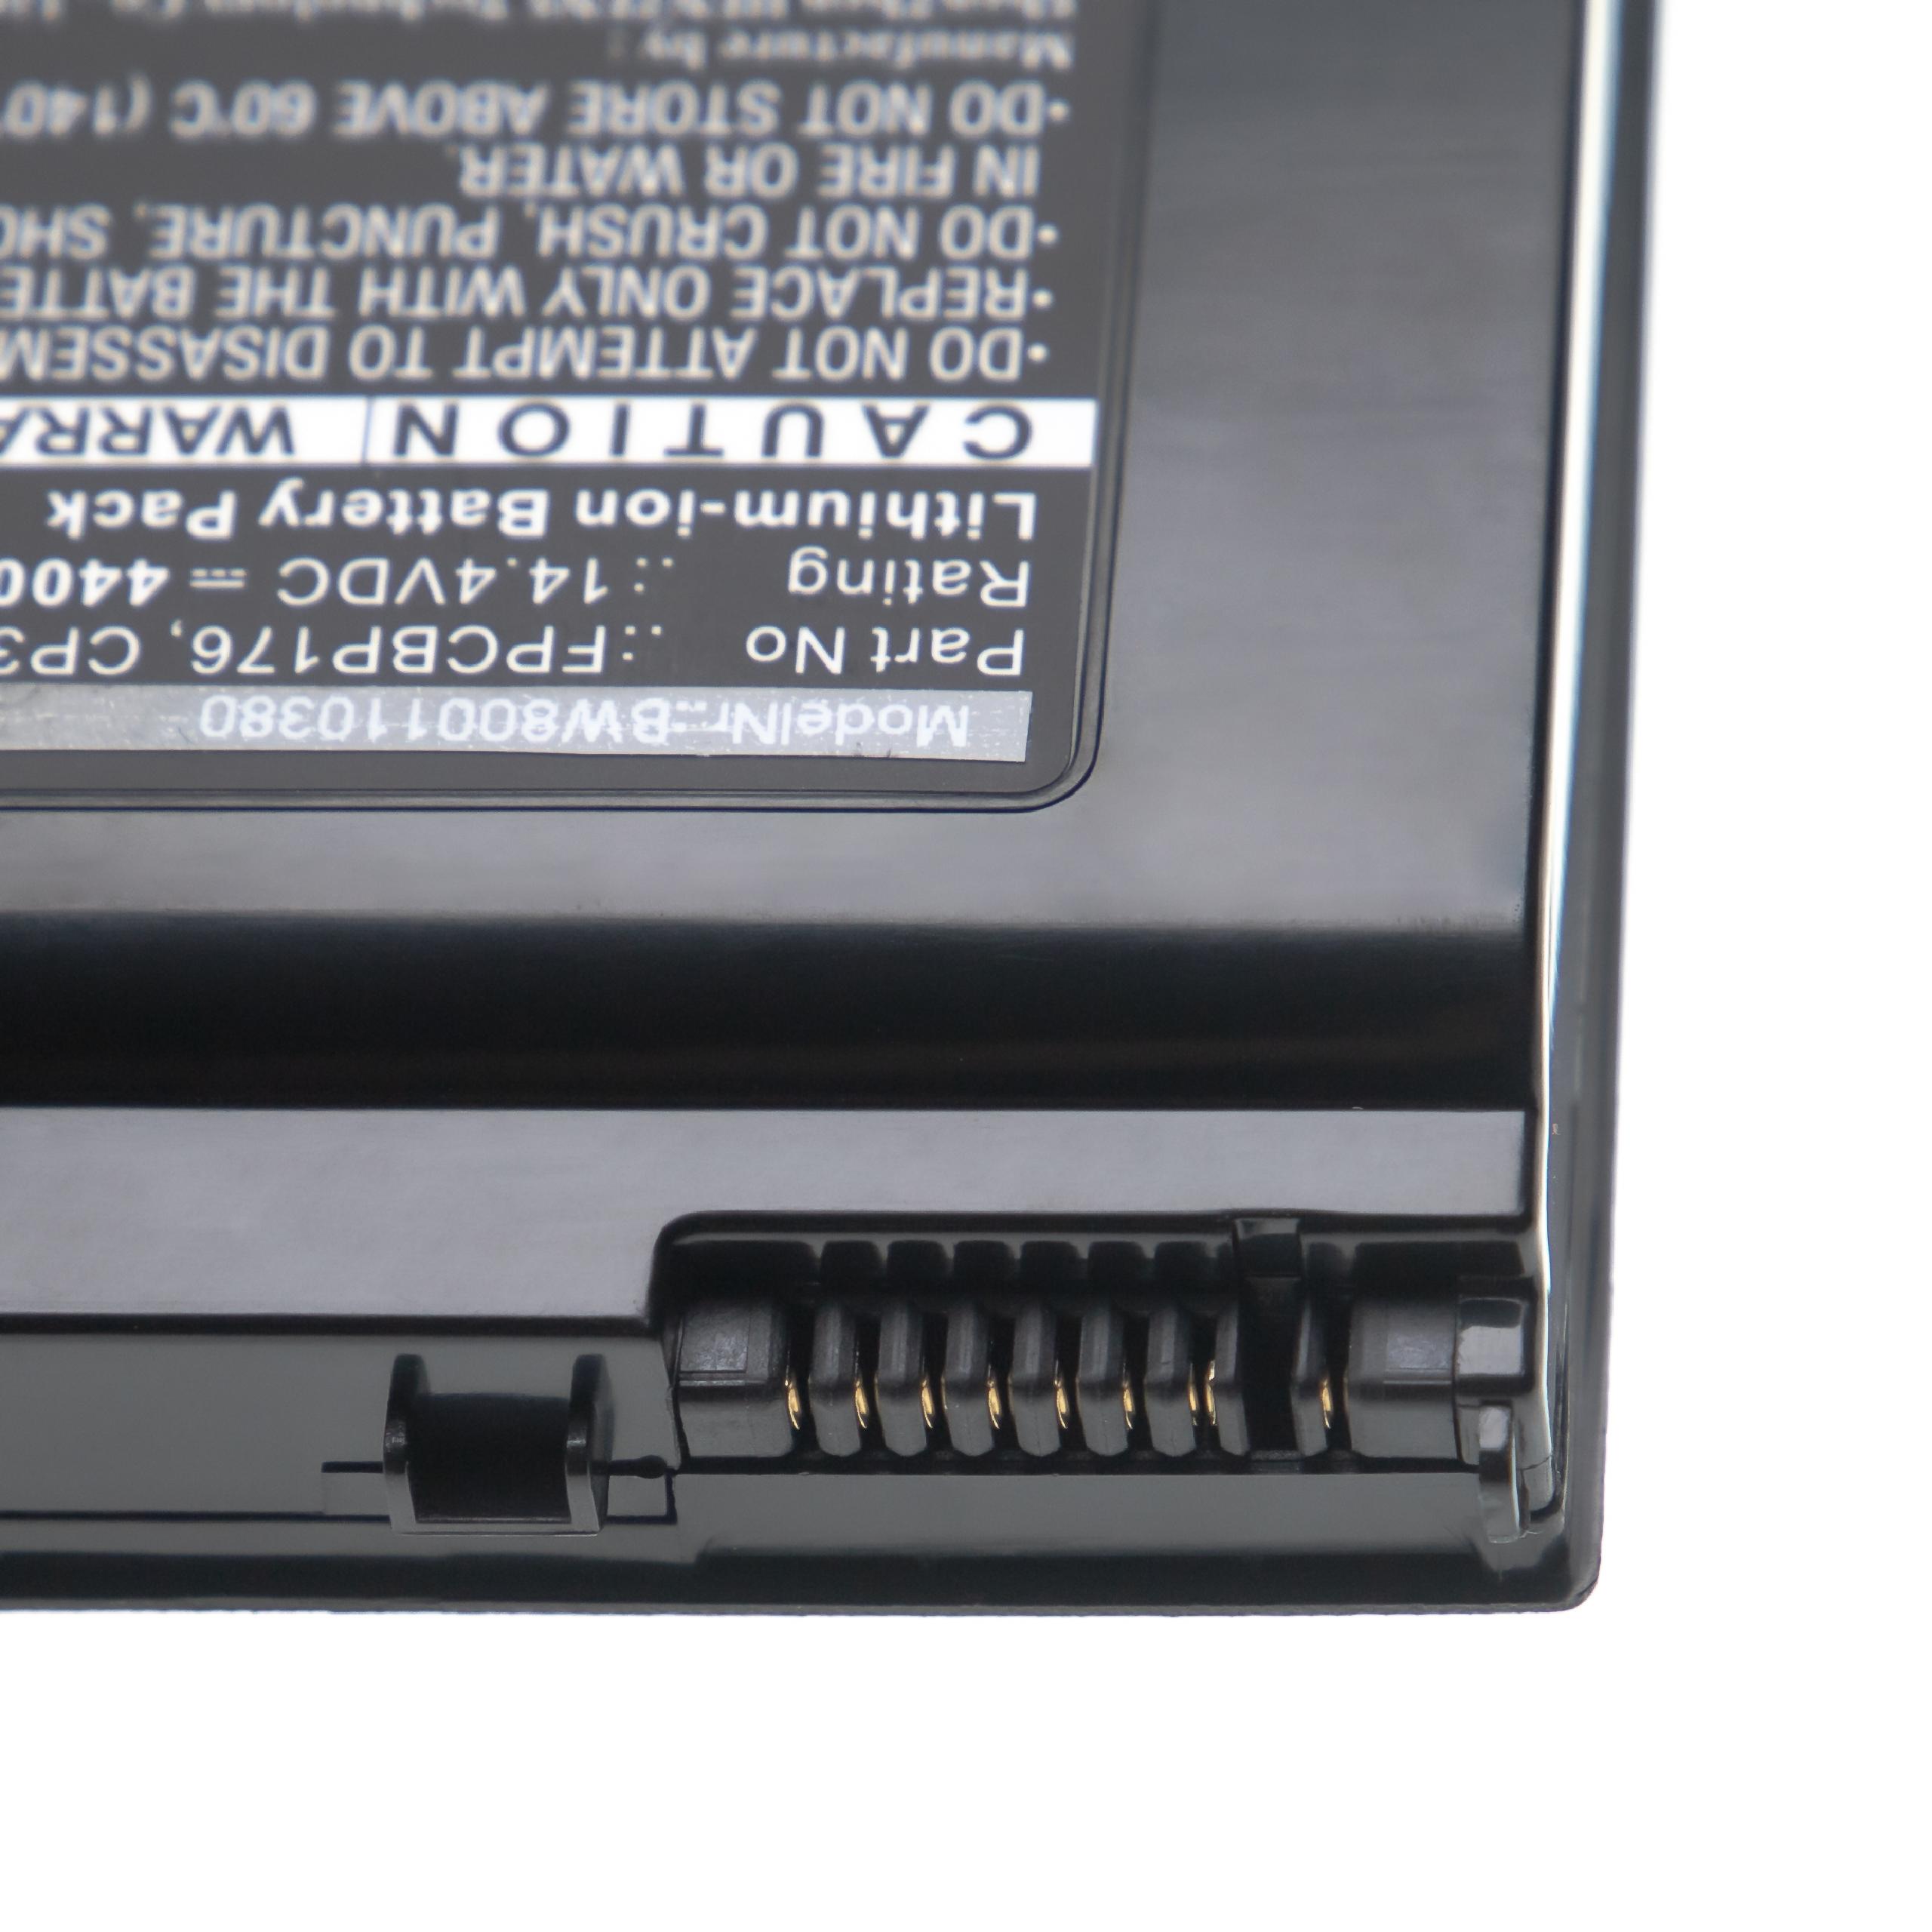 Batteria sostituisce Fujitsu 0644670, CP335311-01, FPCBP175 per notebook Fujitsu - 4400mAh 14,4V Li-Ion nero